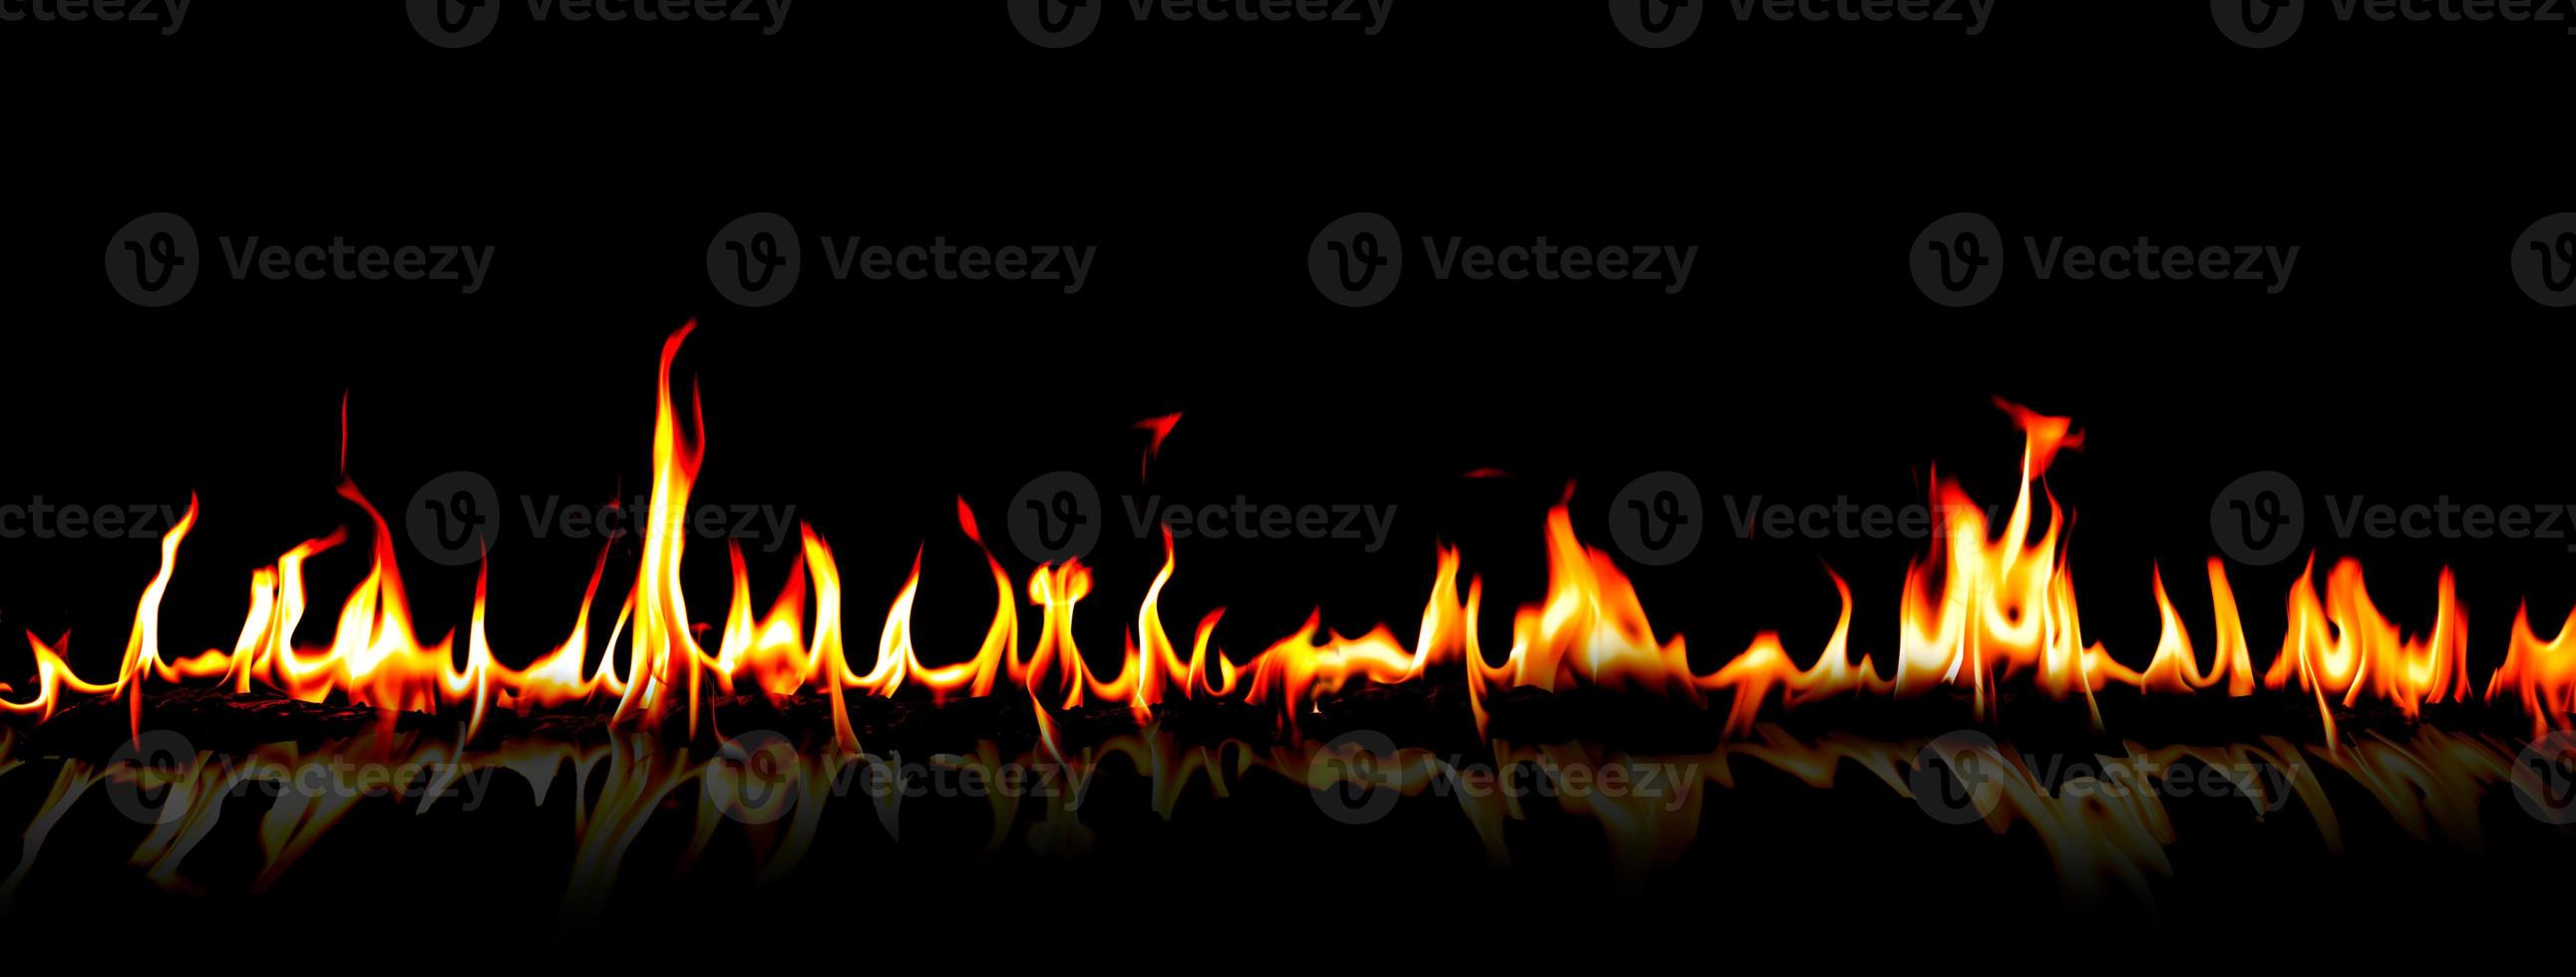 flammes de feu sur fond noir d'art abstrait, photo